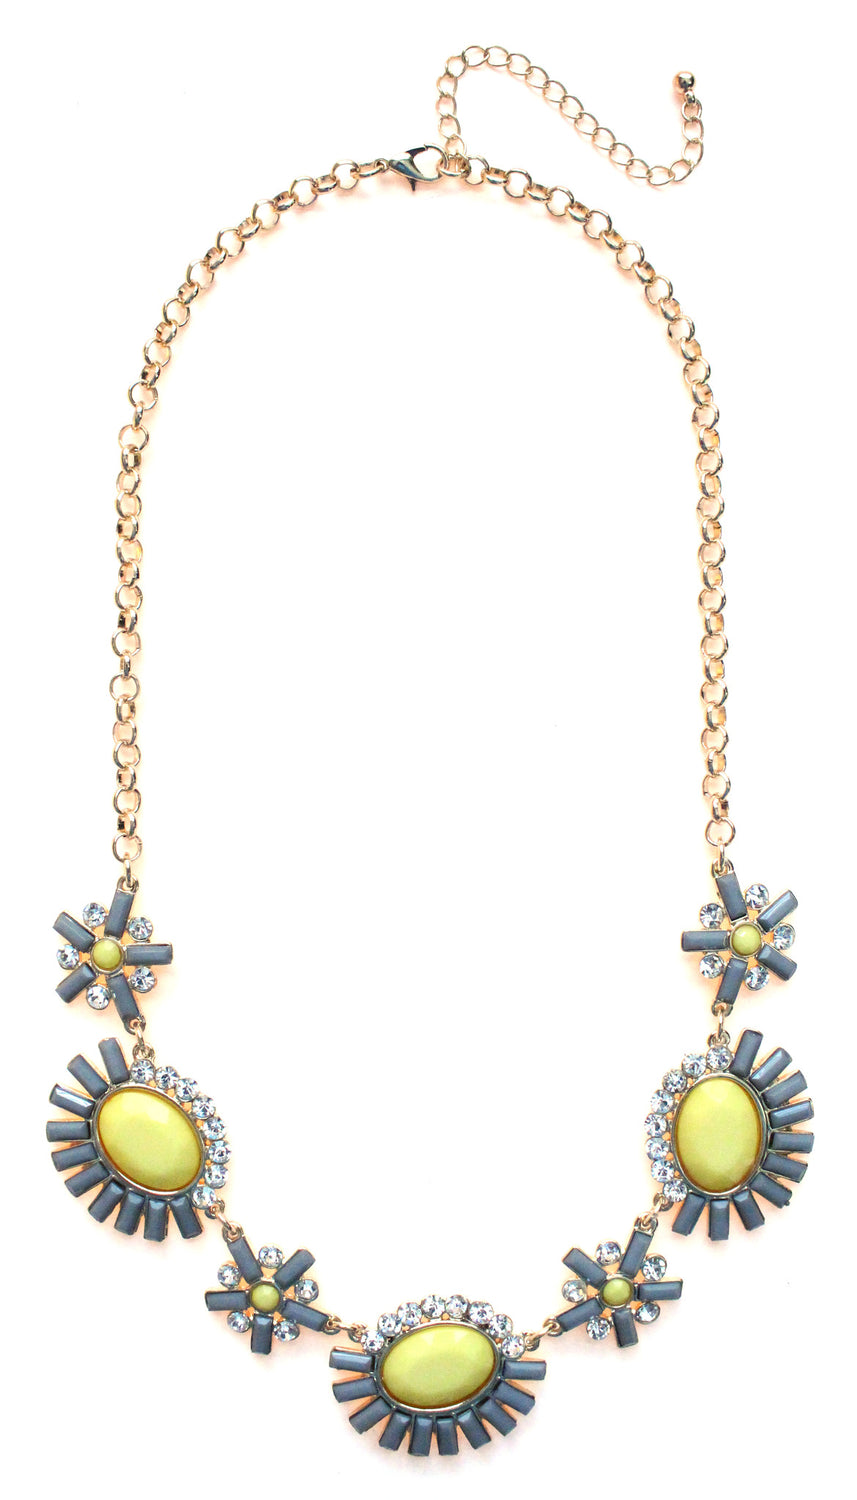 Sunshine Sparkle Necklace- Gray & Yellow